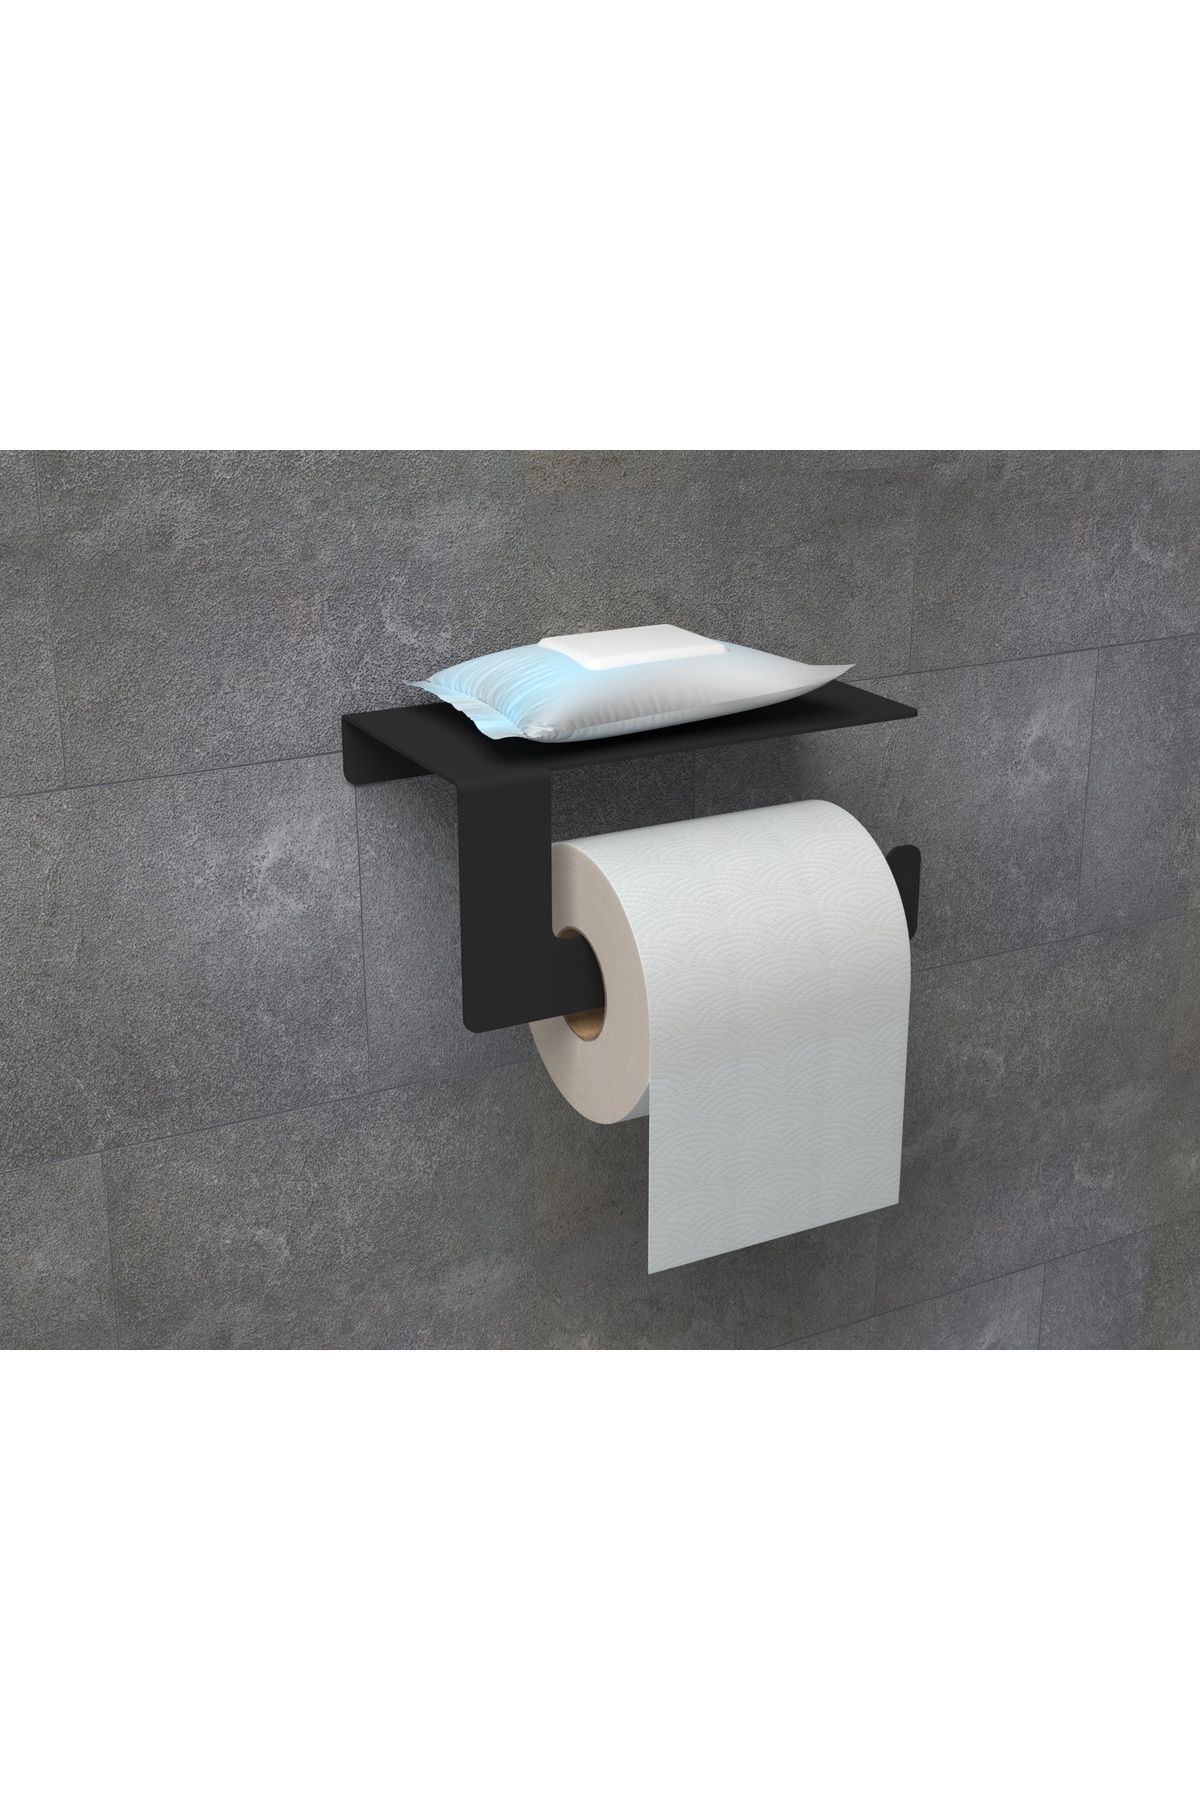 kraker Metal Mat Siyah Telefon Raflı Tuvalet Kağıtlık